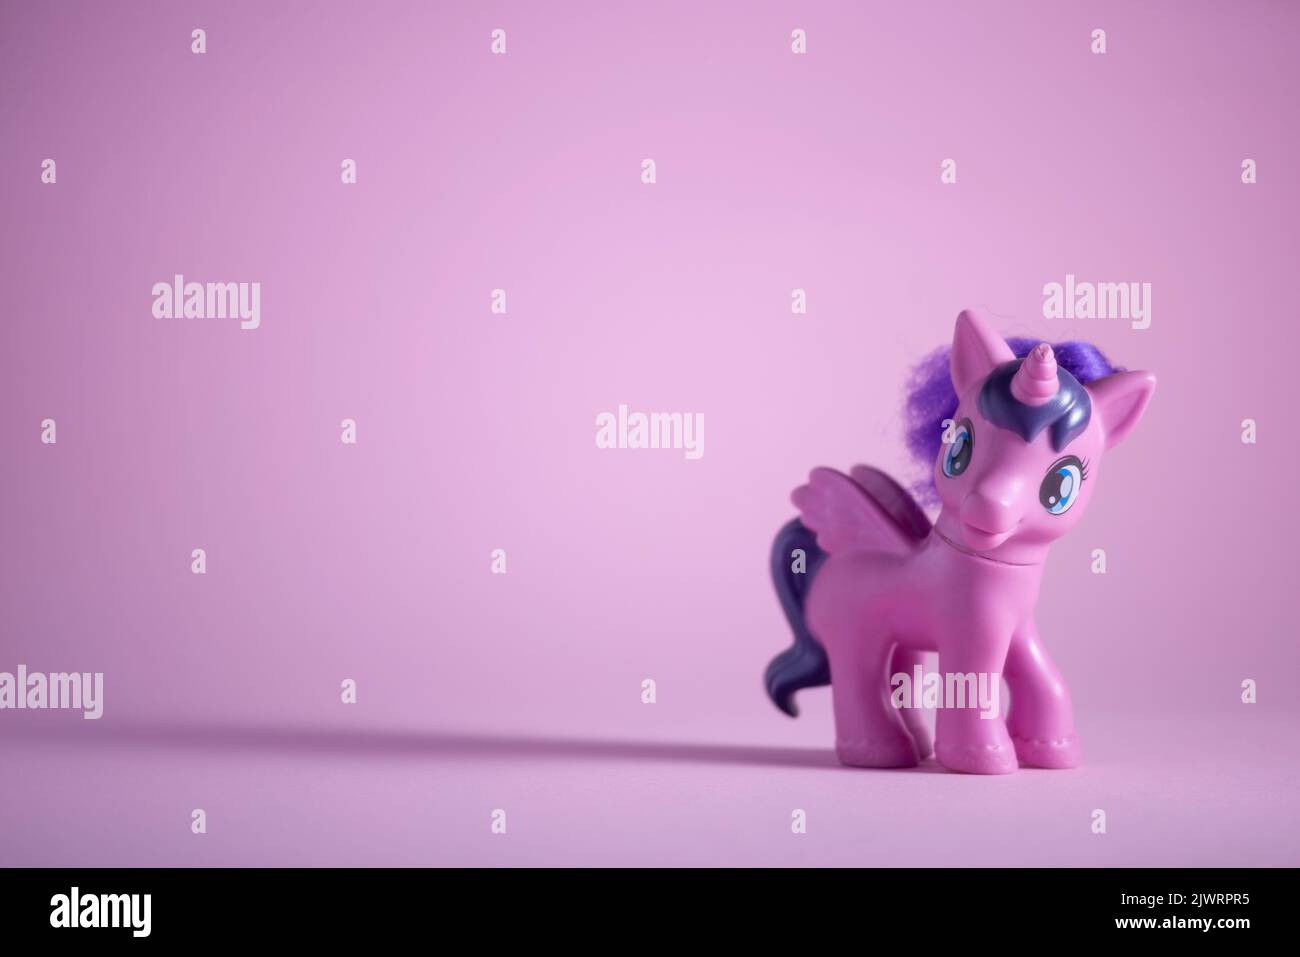 toy pink unicorn pony on a pink background. Stock Photo